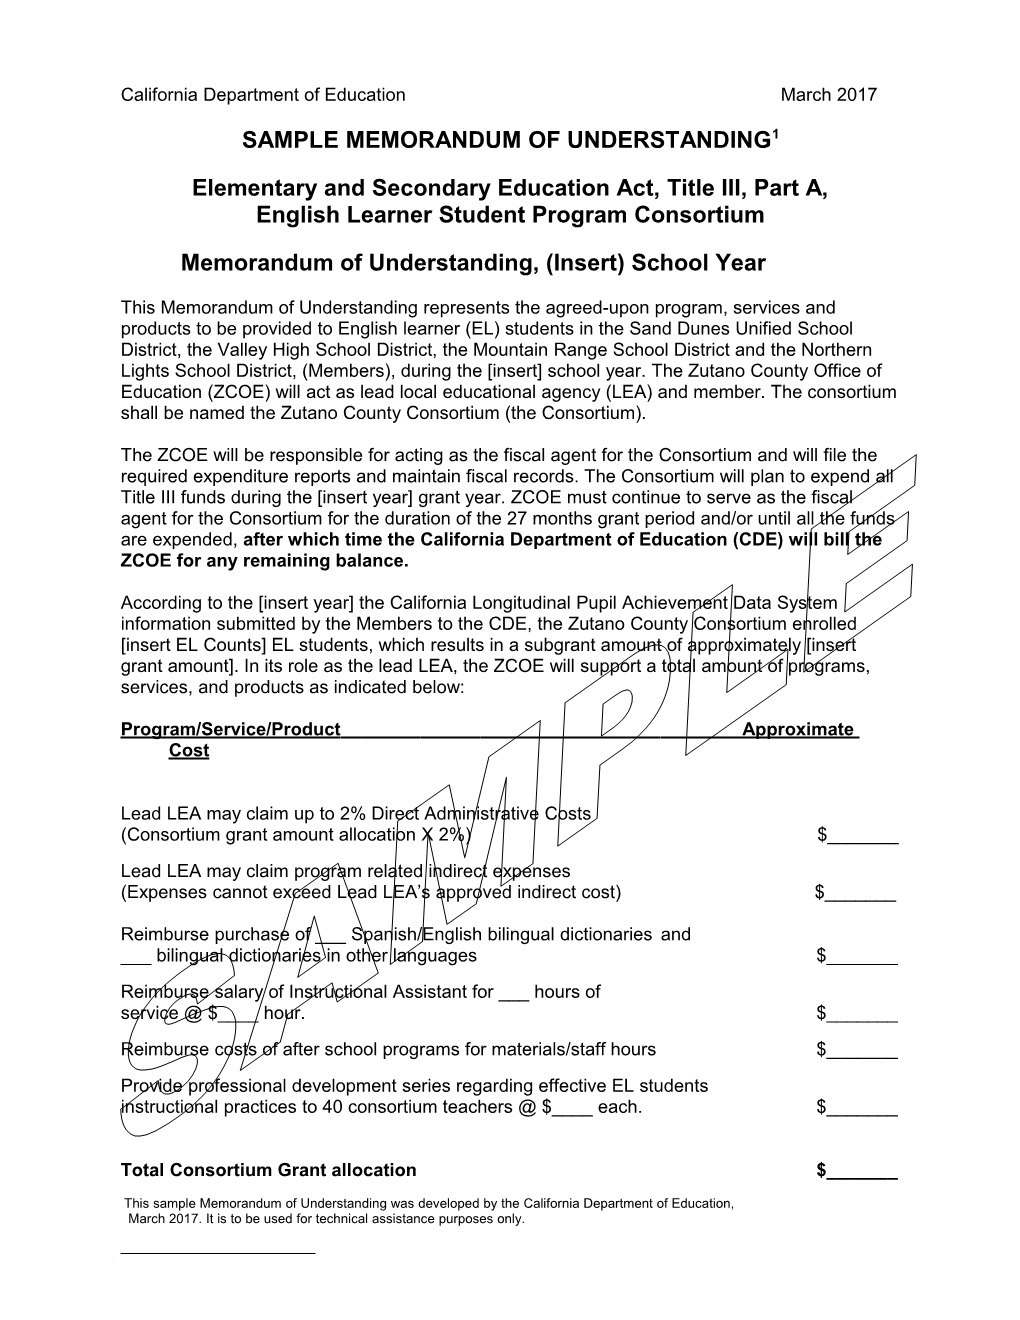 Sample MOU - Title III LEP (CA Dept of Education)